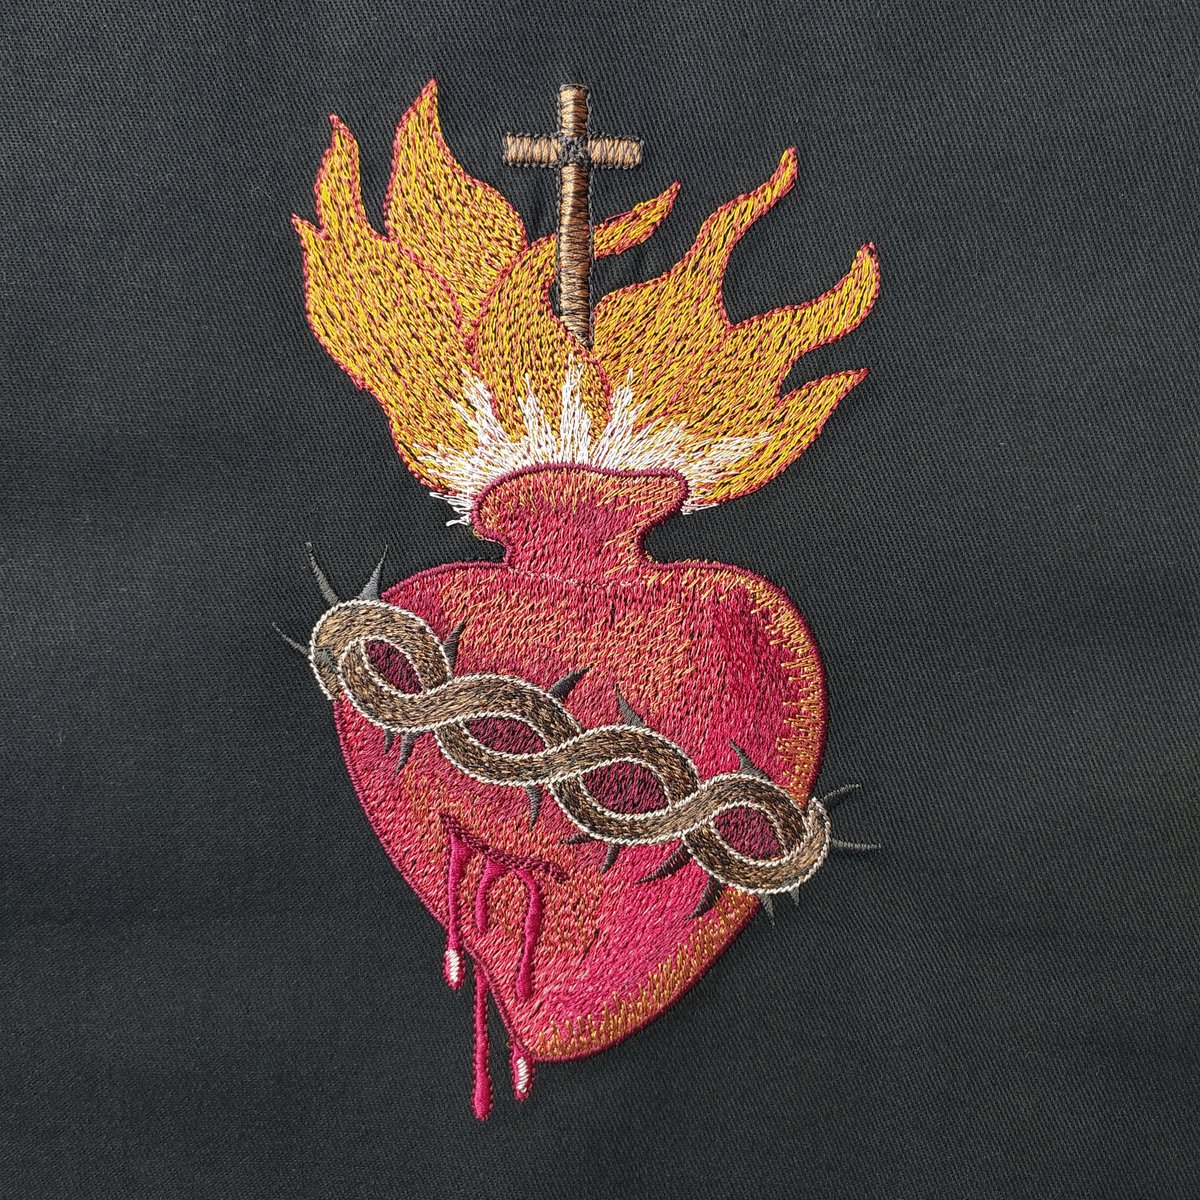 Sacred Heart.

#threadedink #threadedinkstudio #embroidery #machineembroidery #digitalembroidery #sacredheart #sacredhearttattoo #tattoo #tattooembroidery